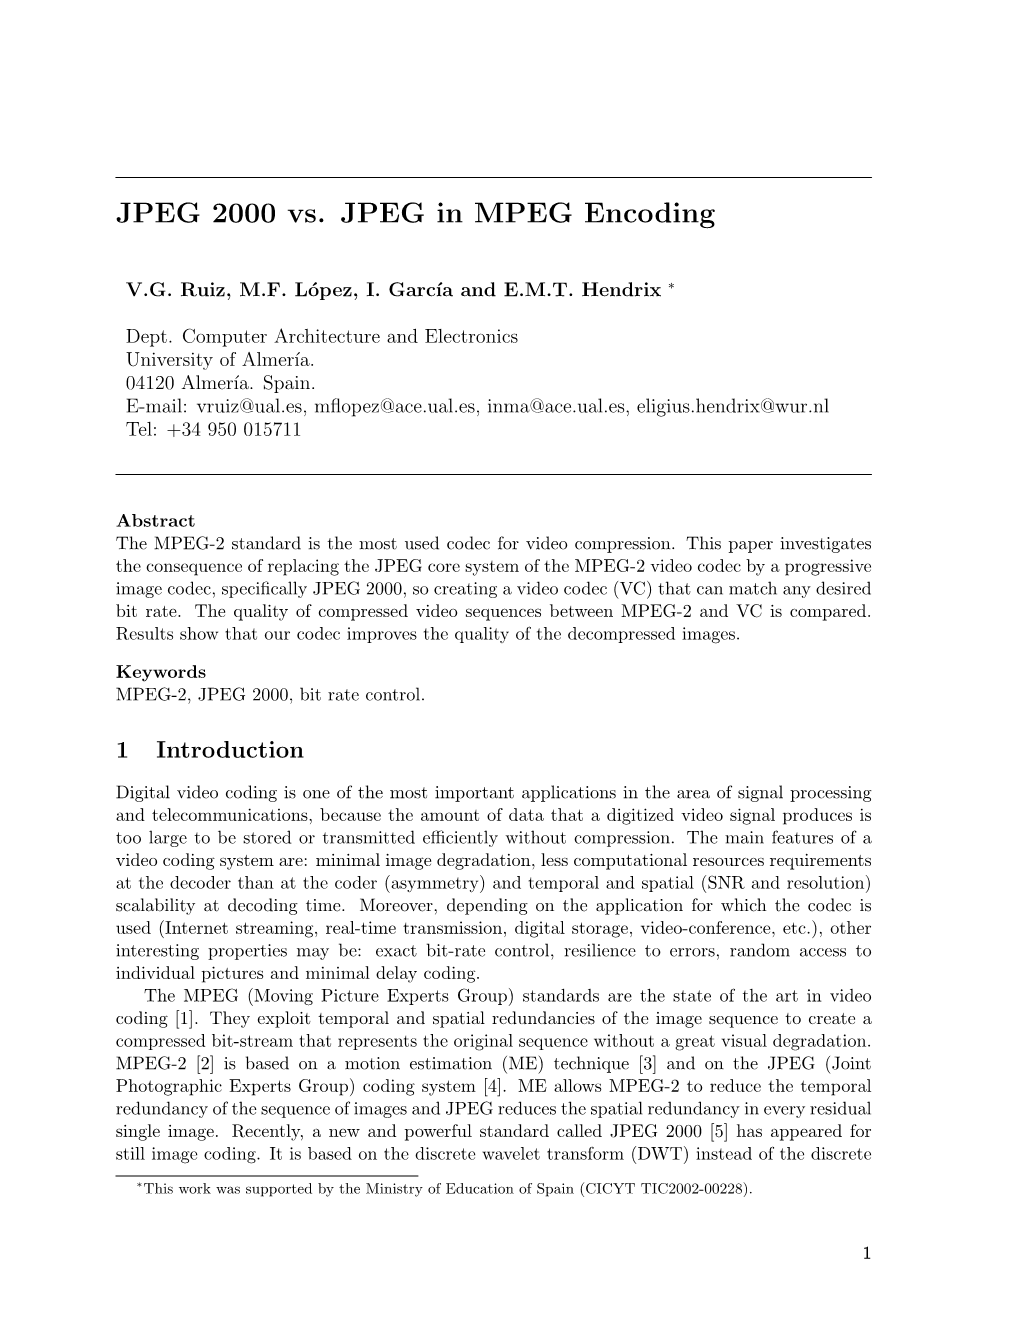 JPEG 2000 Vs. JPEG in MPEG Encoding